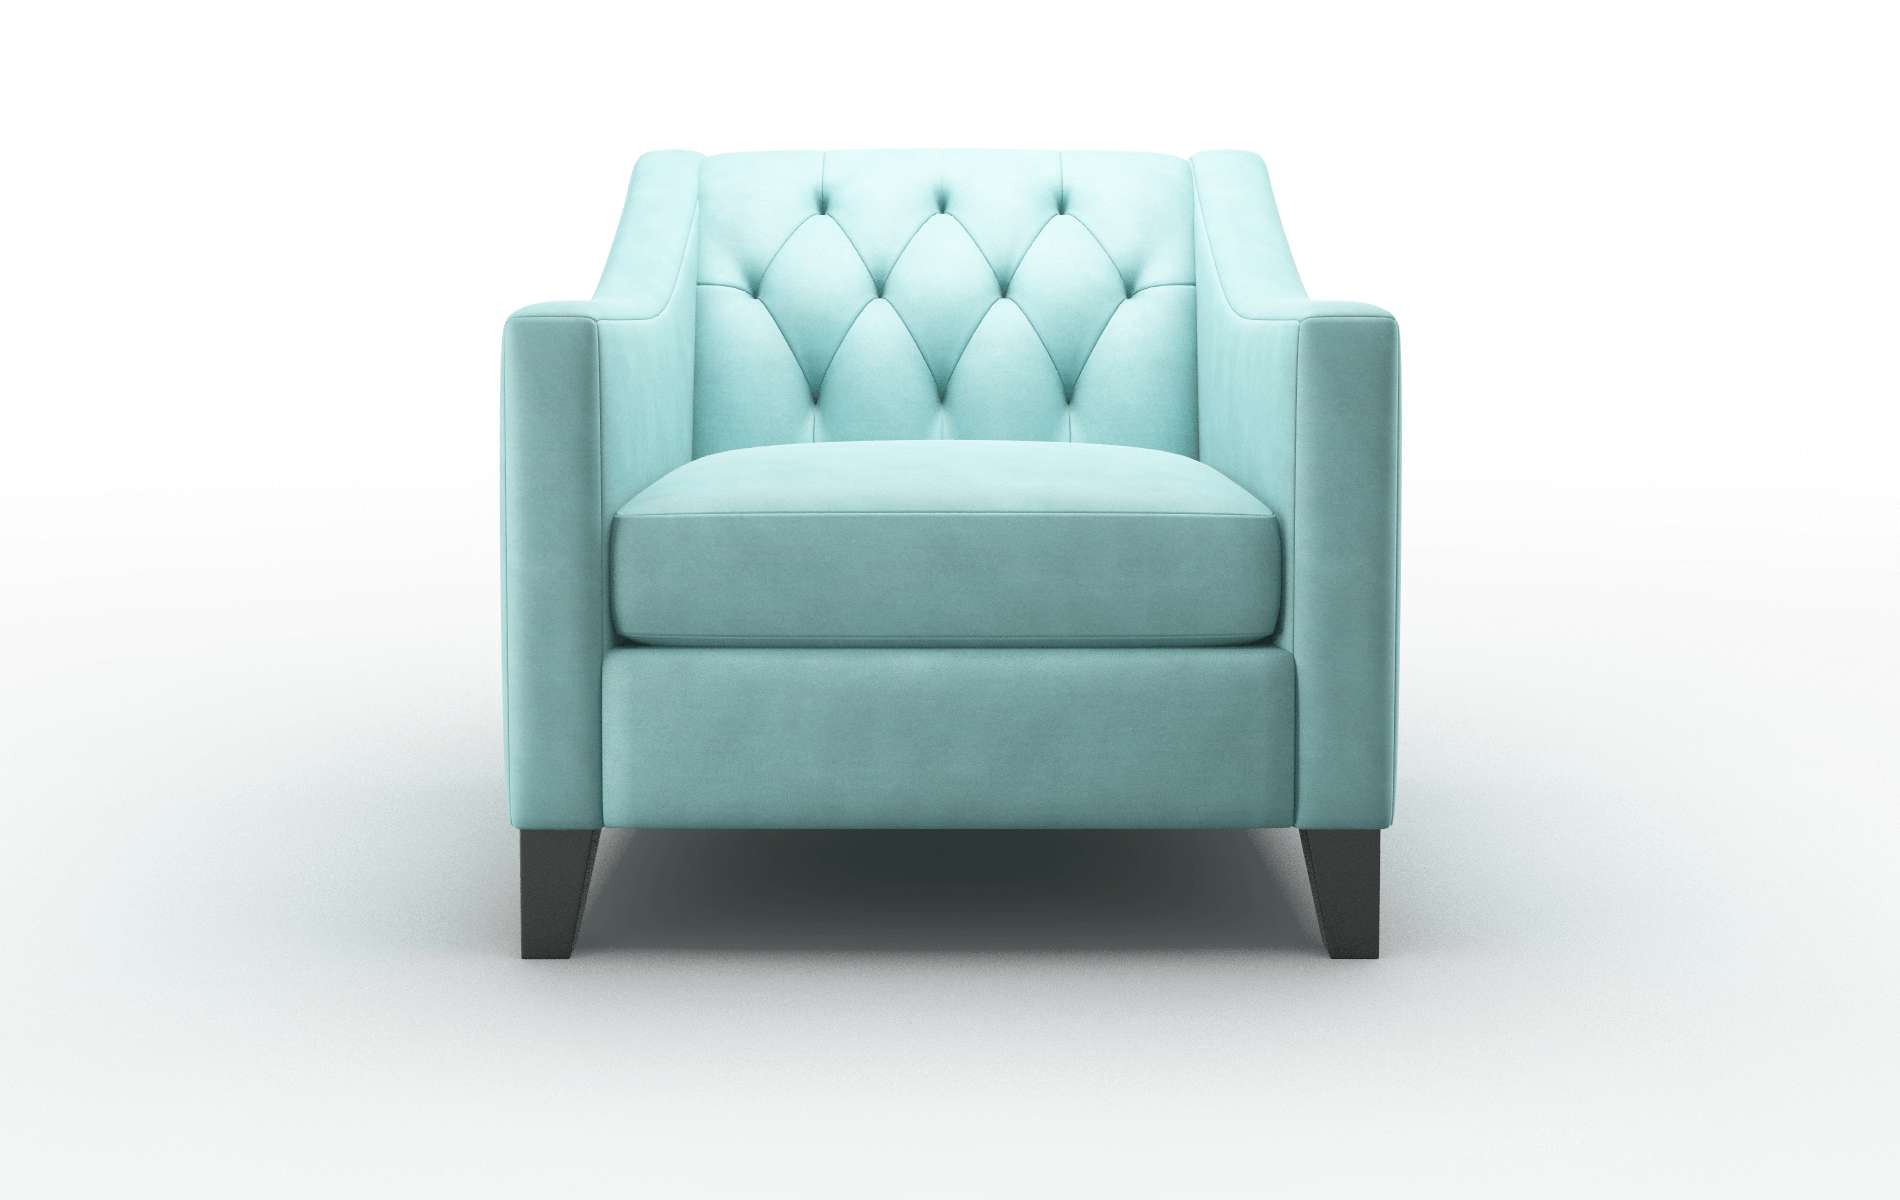 Seville Curious Turquoise Chair espresso legs 1